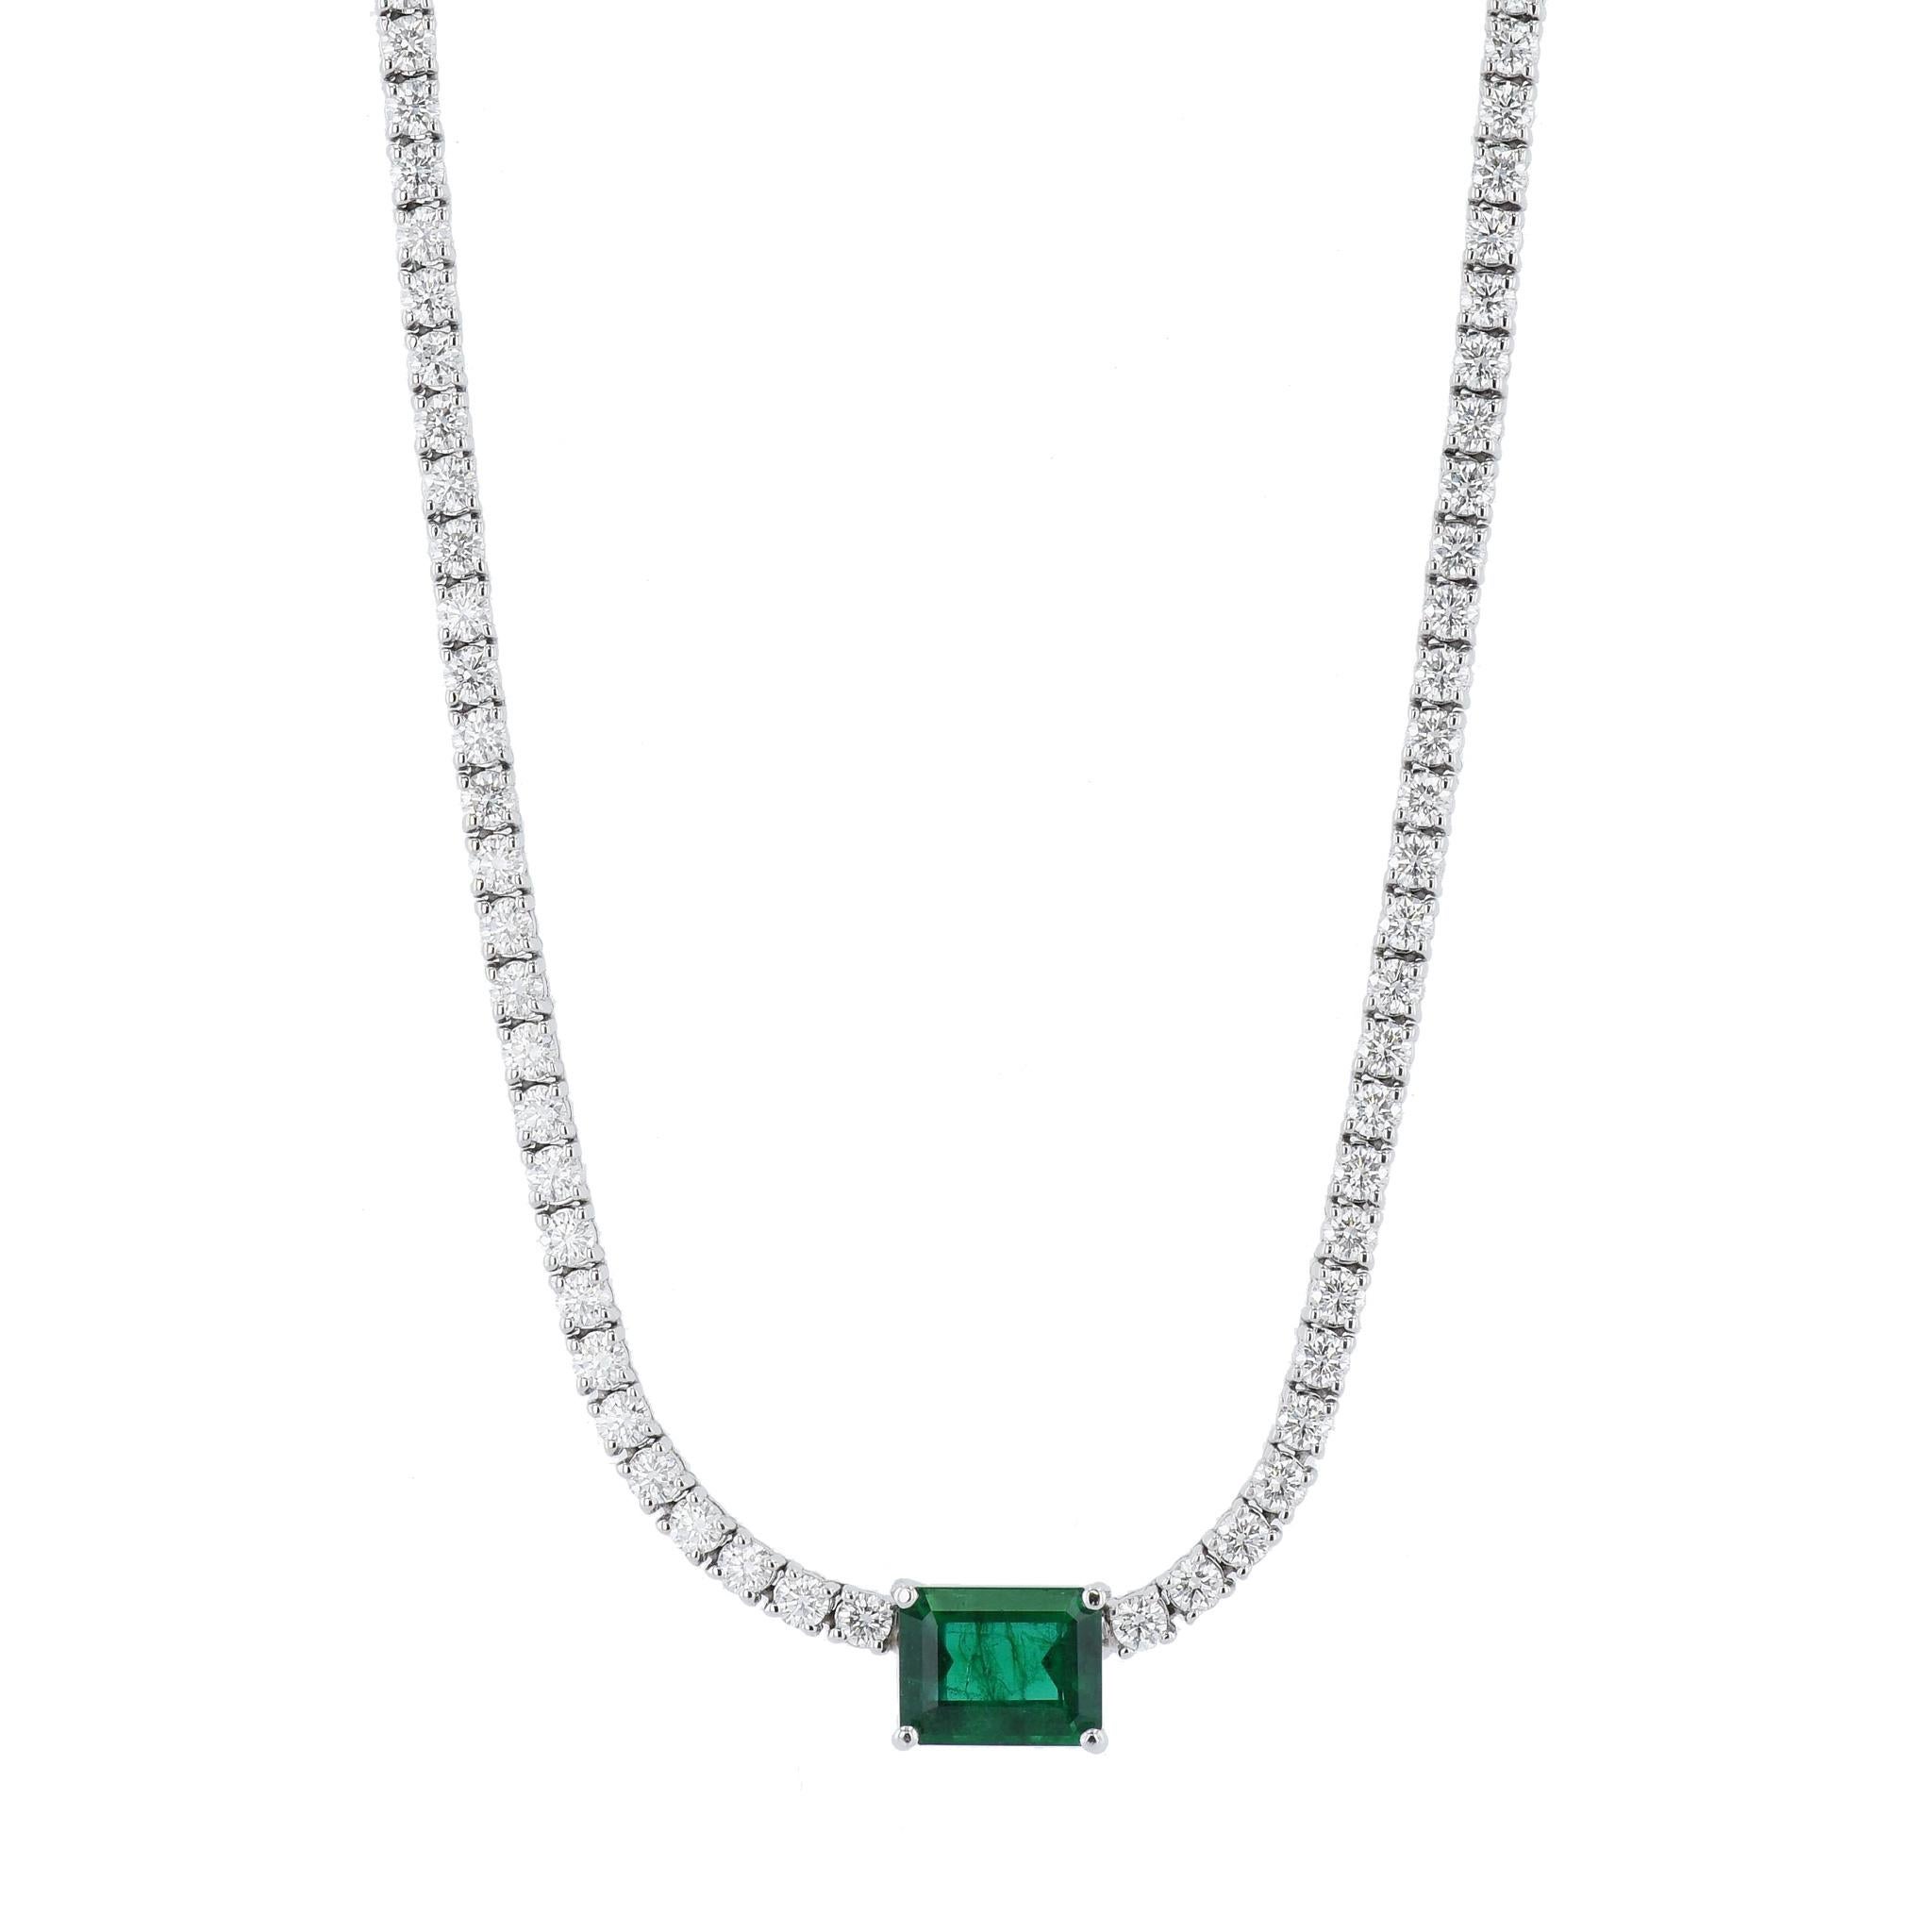 Handmade Emerald Cut Zambian Emerald Diamond Tennis Necklace 18 Karat Gold In New Condition For Sale In Miami, FL